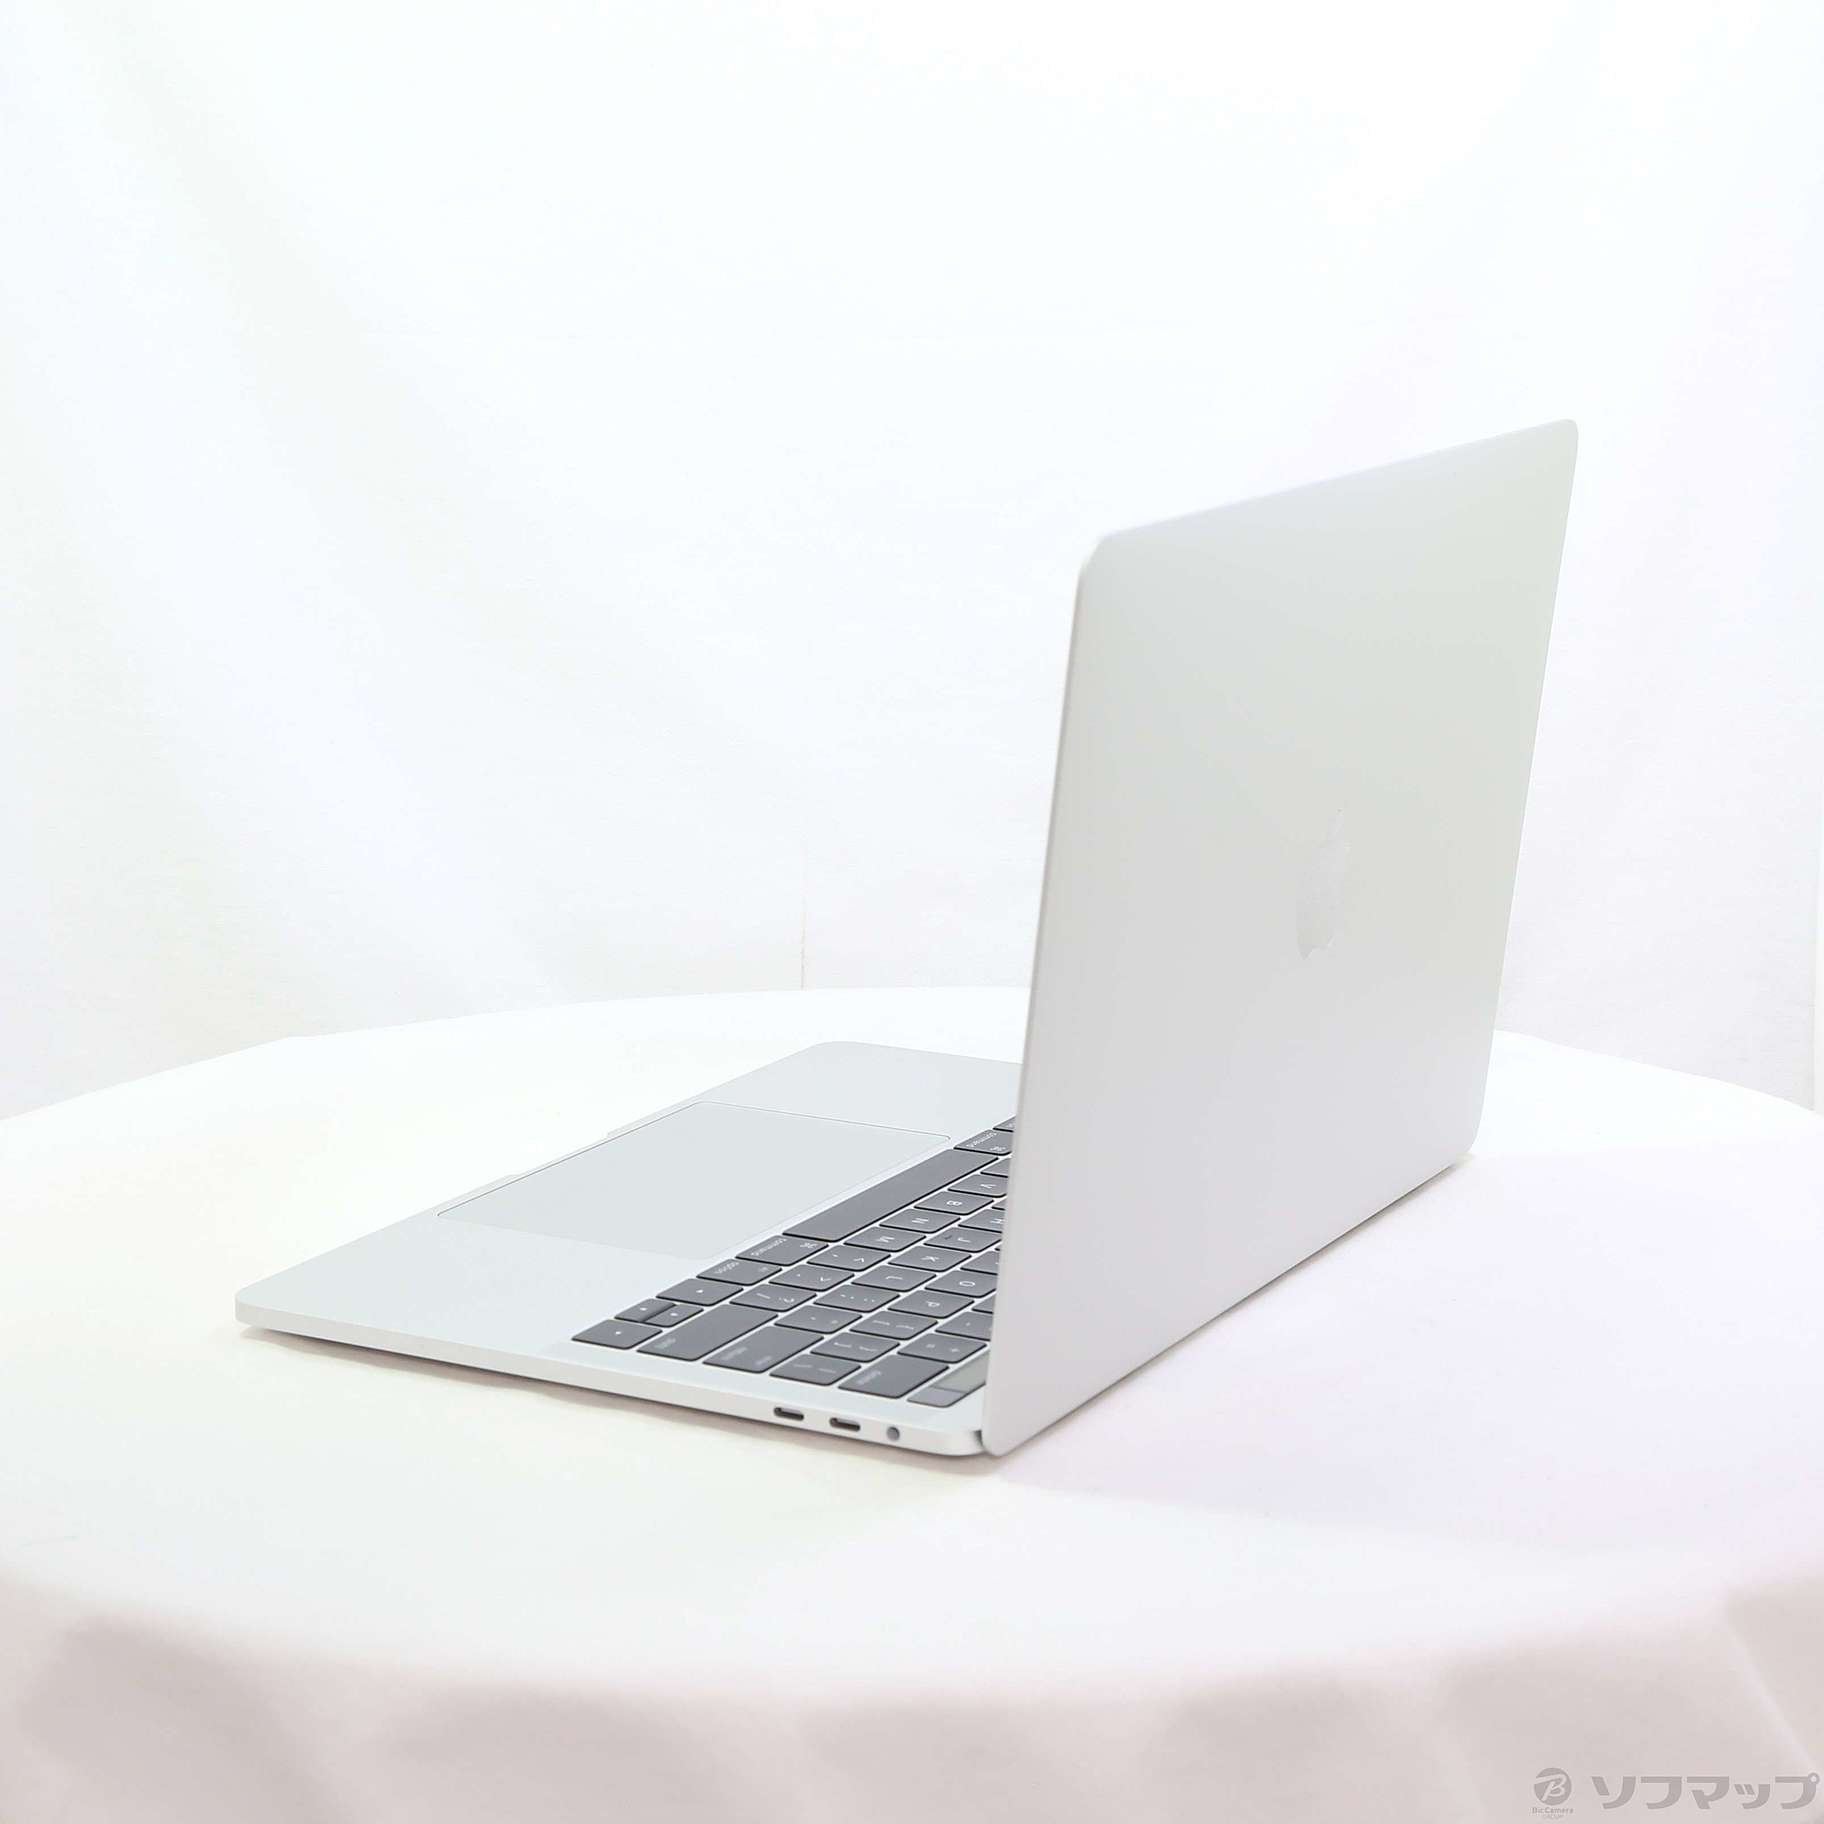 APPLE MacBook Pro MLVP2J/A